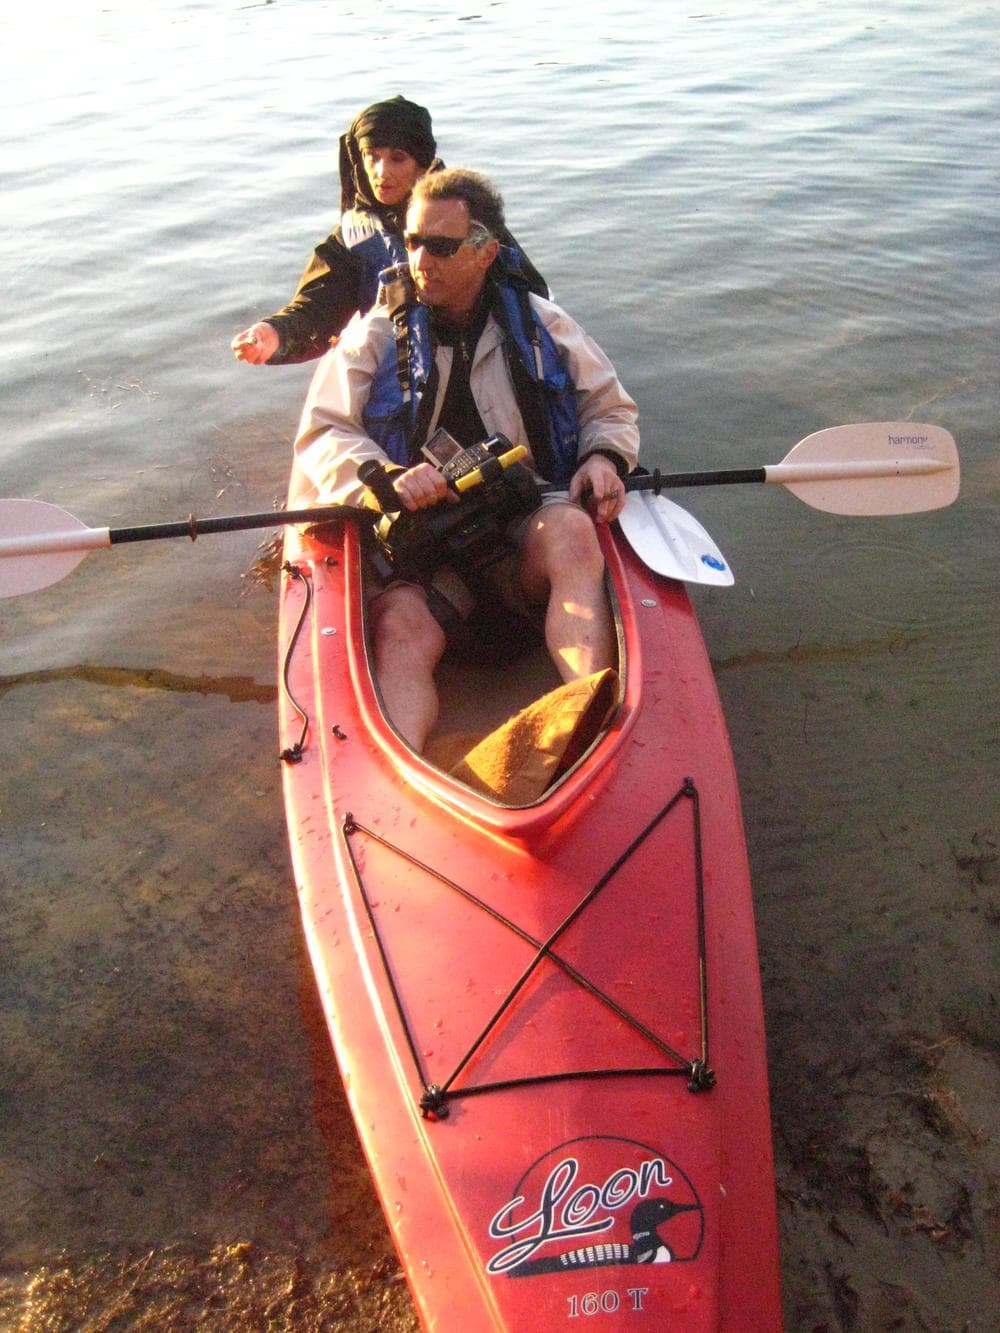 Kotsonis and Moth kayacking in 2008 in Cape Cod. (Margaret Moth/Stef Kotsonis)